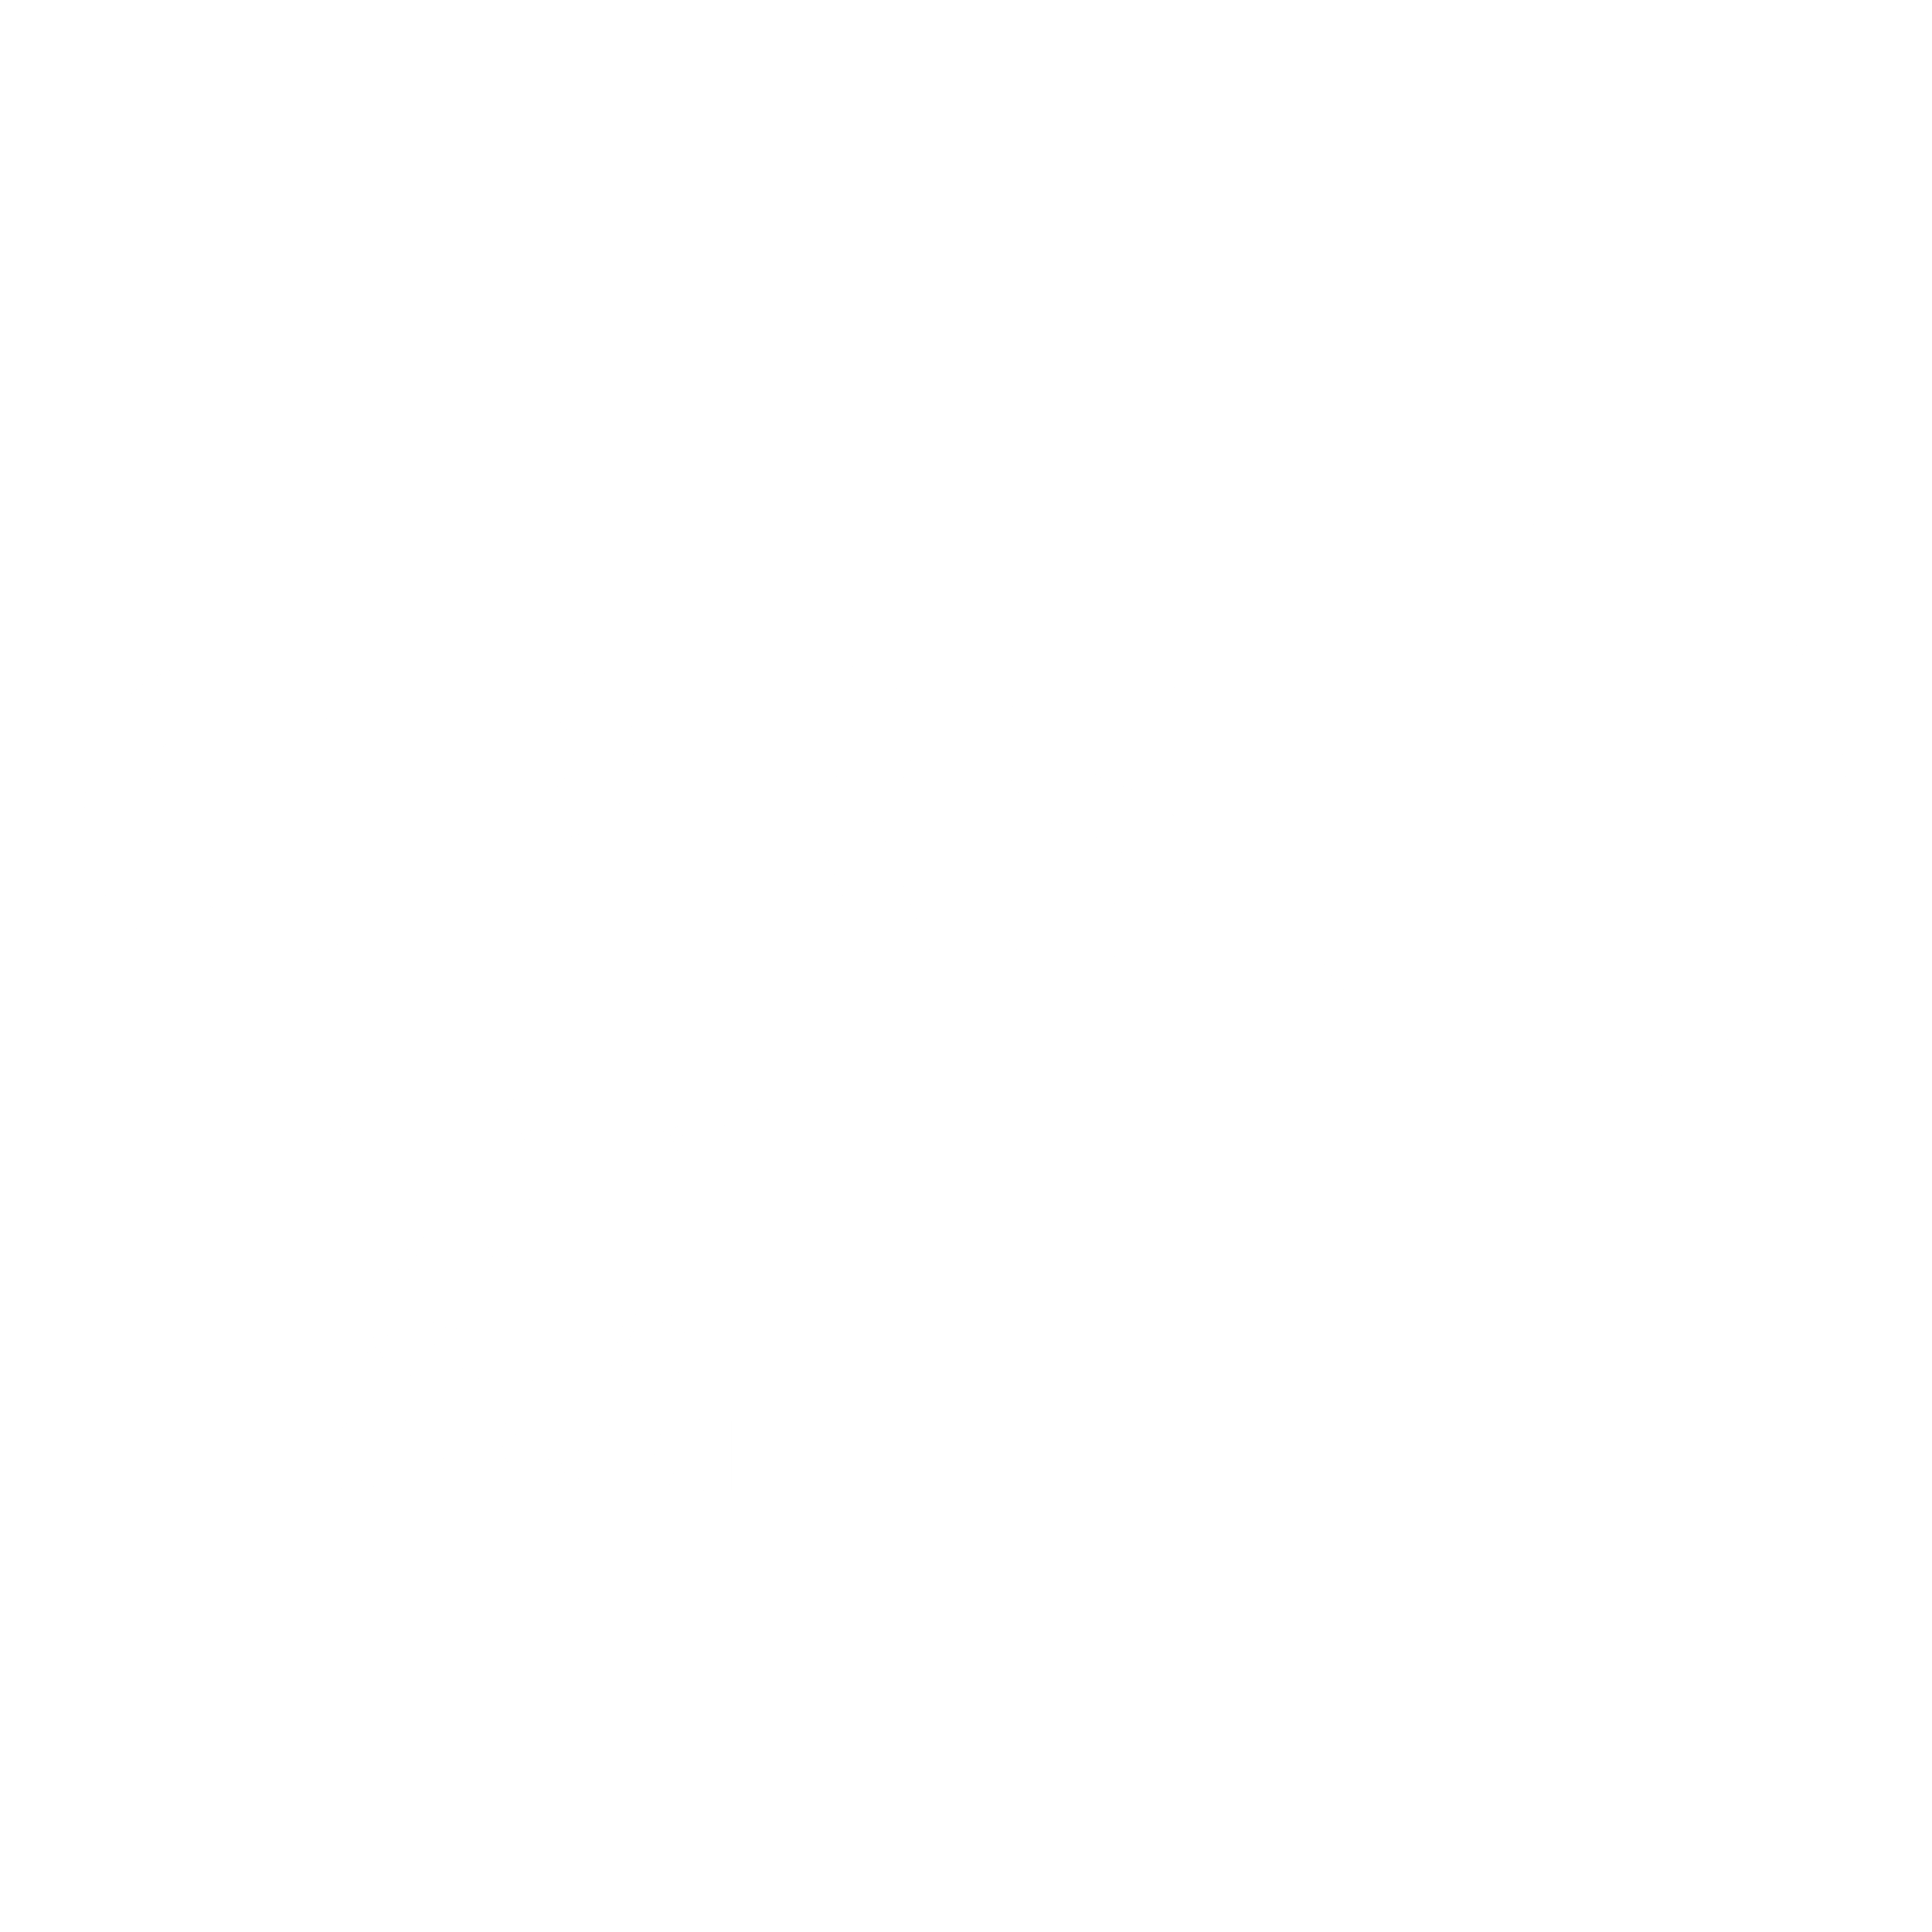 GPRS Logo - GPRS Logo PNG Transparent & SVG Vector - Freebie Supply